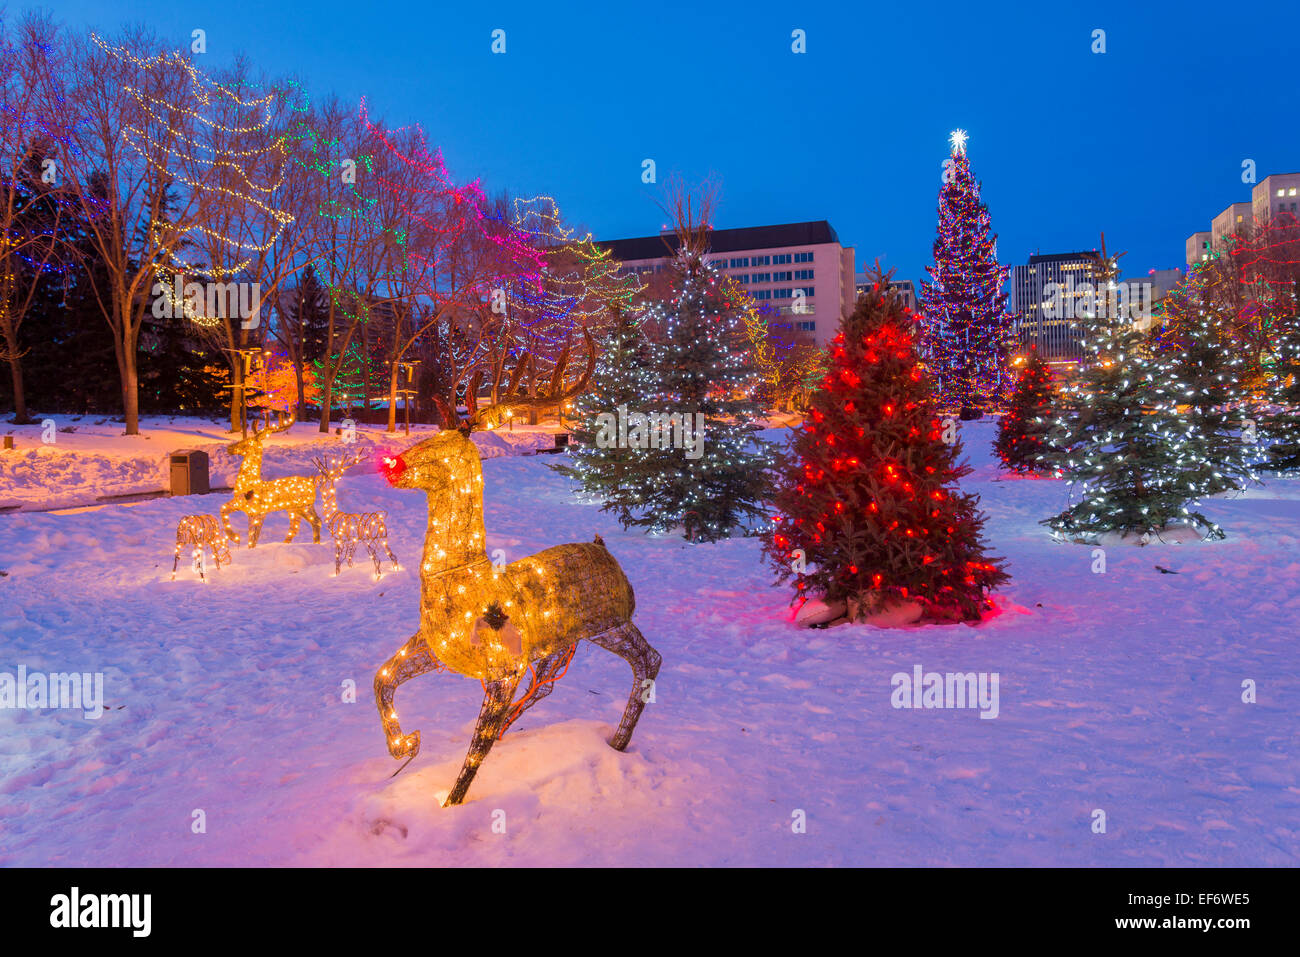 Christmas display featuring Rudolph the red nosed reindeer, Legislature Grounds, Edmonton, Alberta, Canada Stock Photo